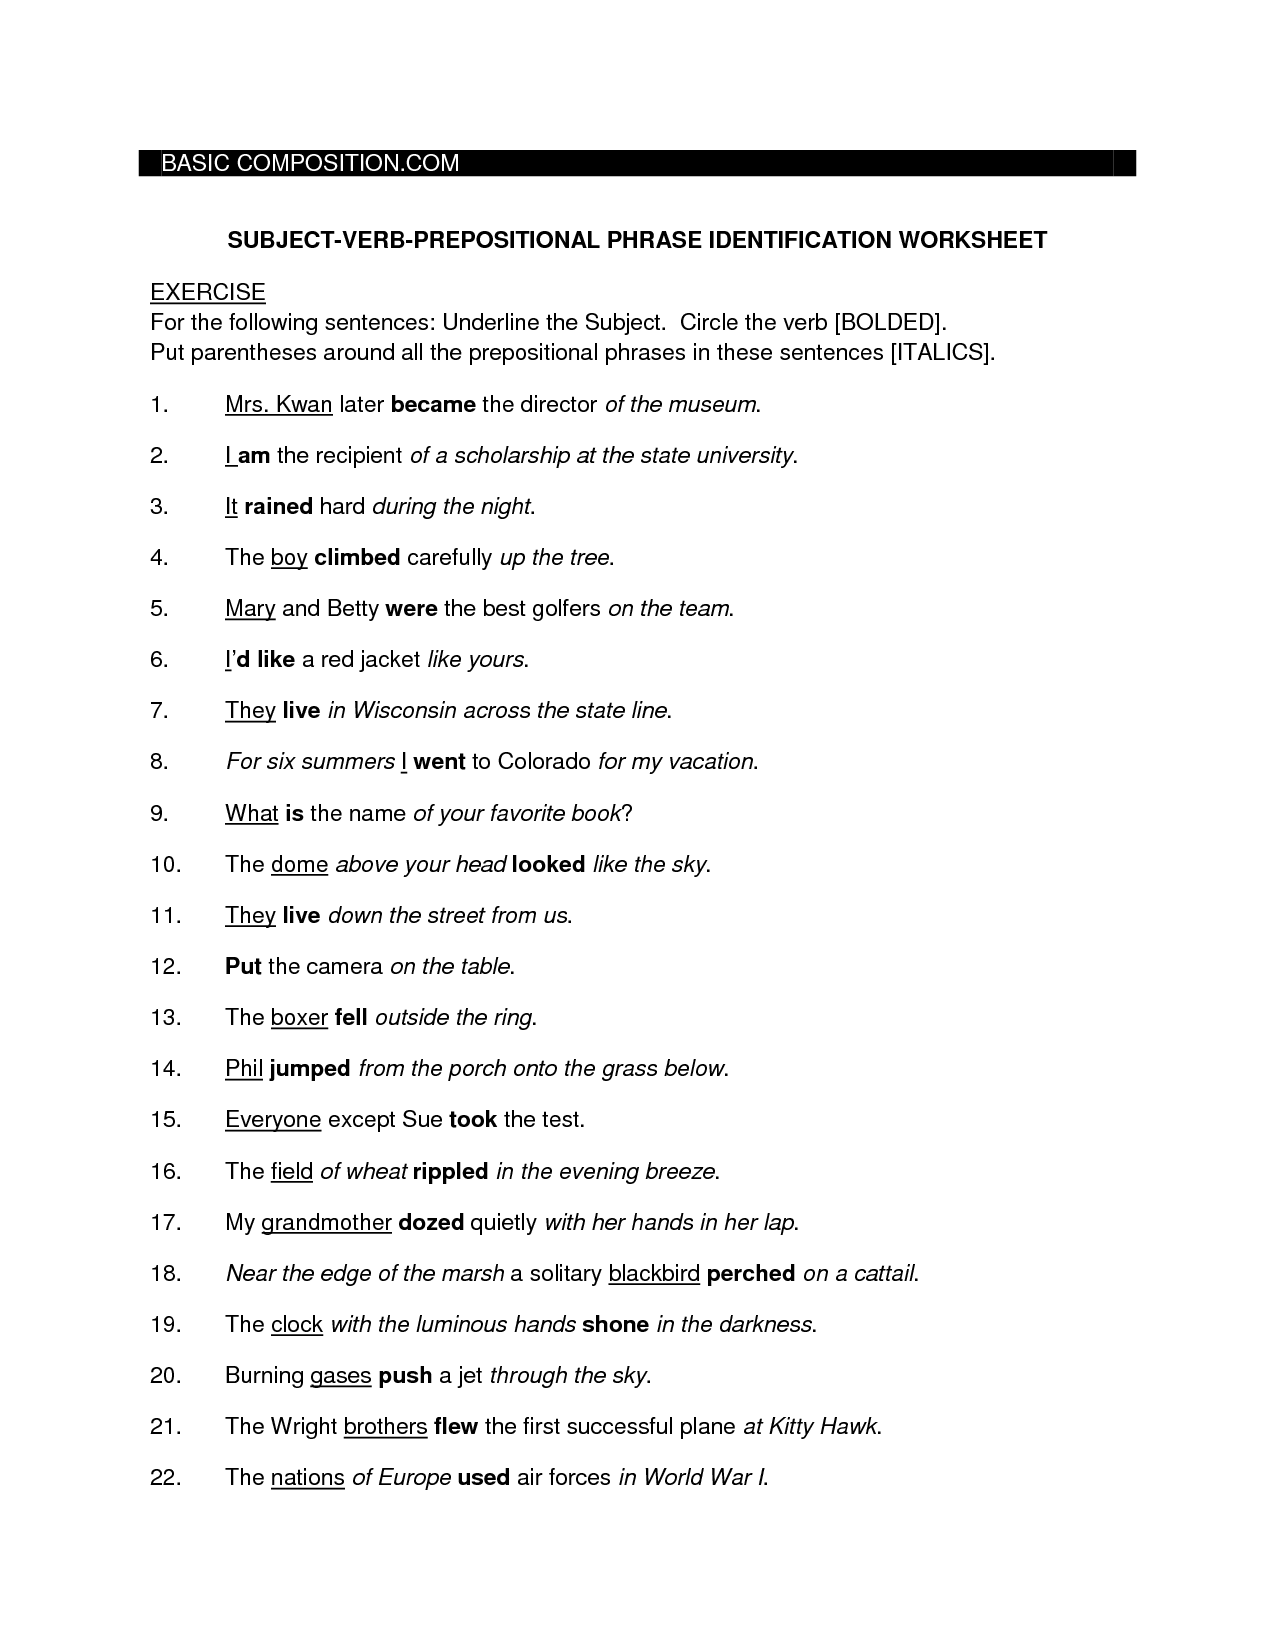 Subject Verb Prepositional Phrases Worksheet Image